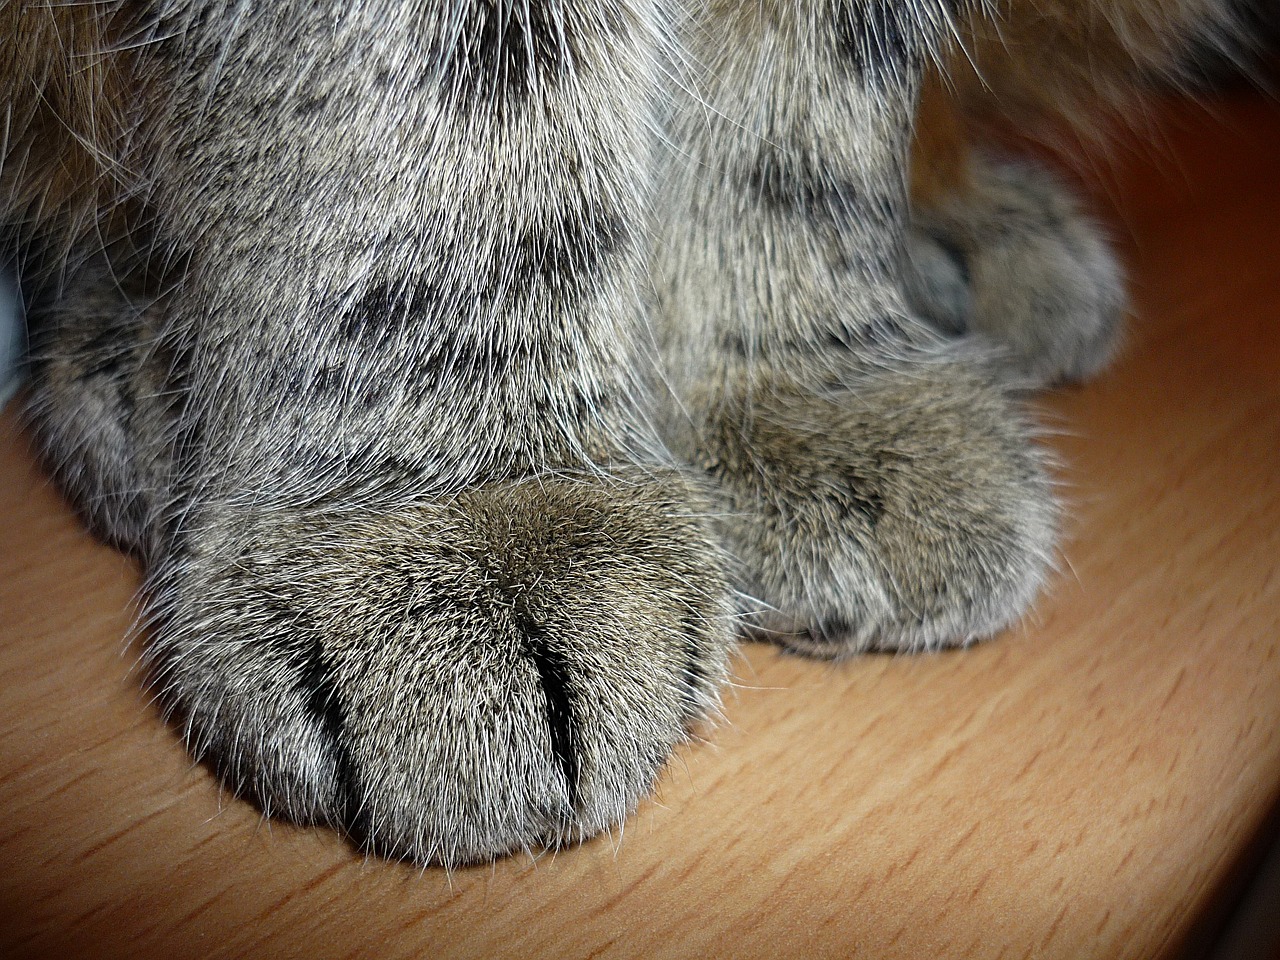 a close up of a cat's paws on a table, a macro photograph, flickr, chinchilla animal, grain”